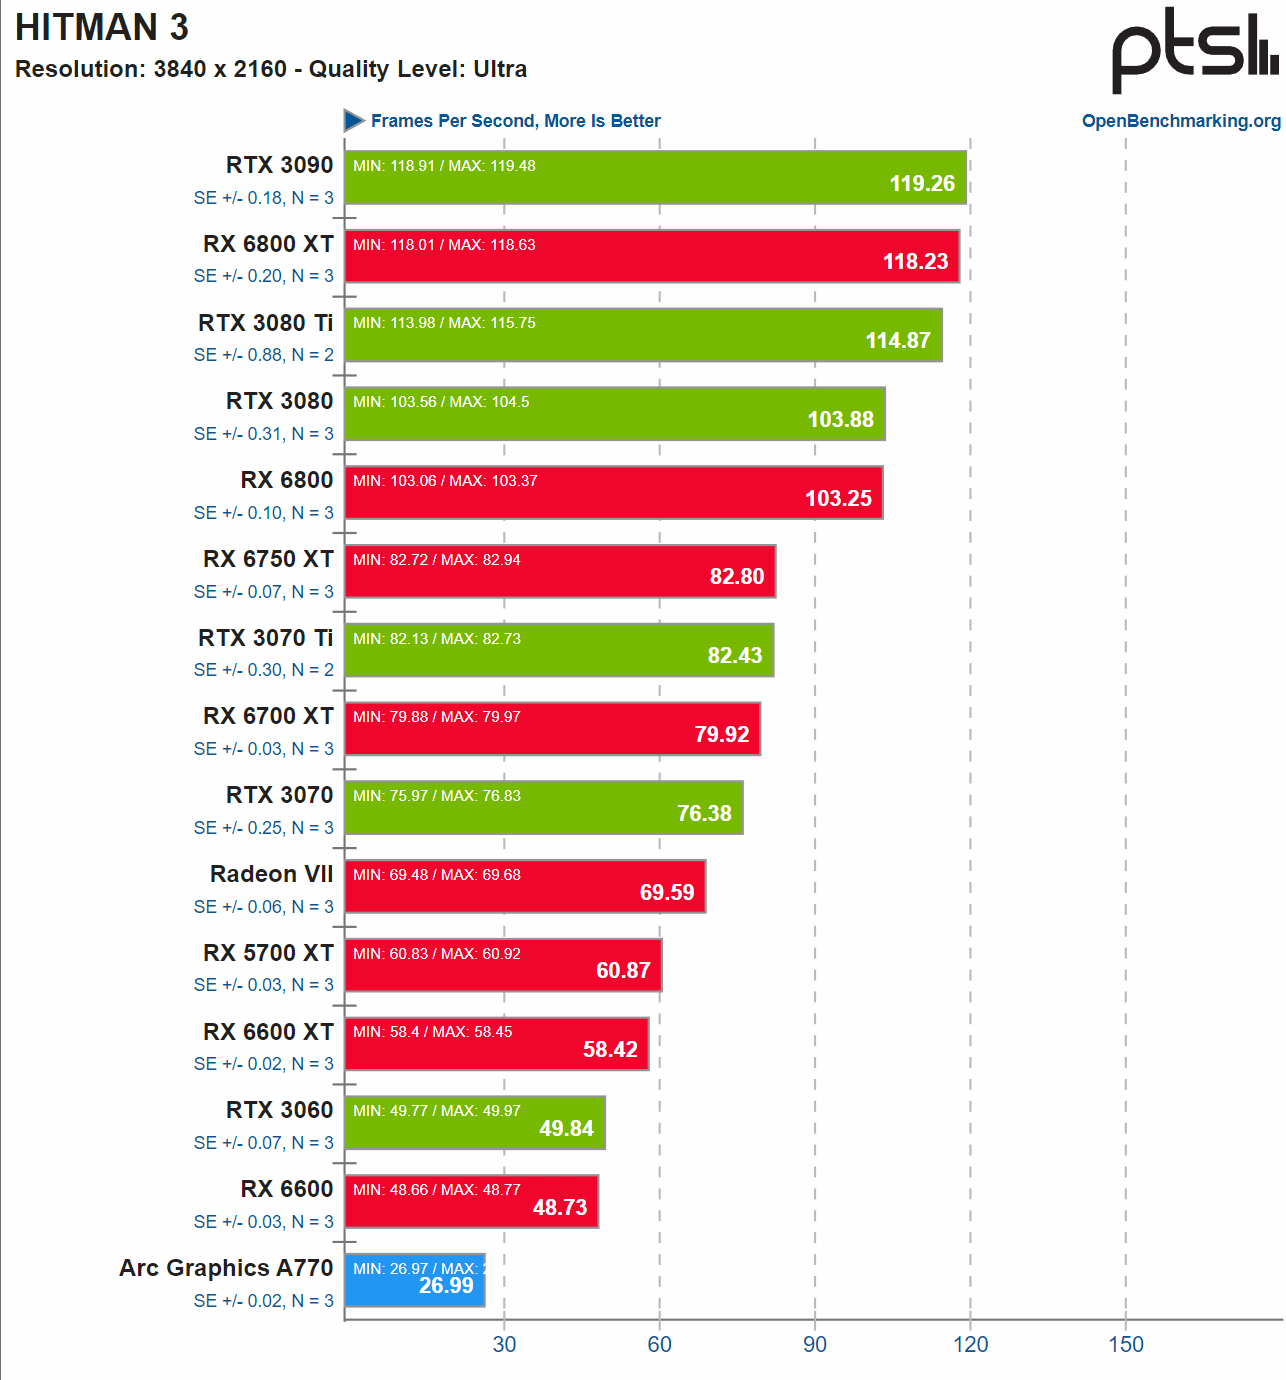 NVIDIA-GeForce-AMD-Radeon-Intel-Arc-Linux-Gaming-Benchmarks-4K-_-Hitman-3.png